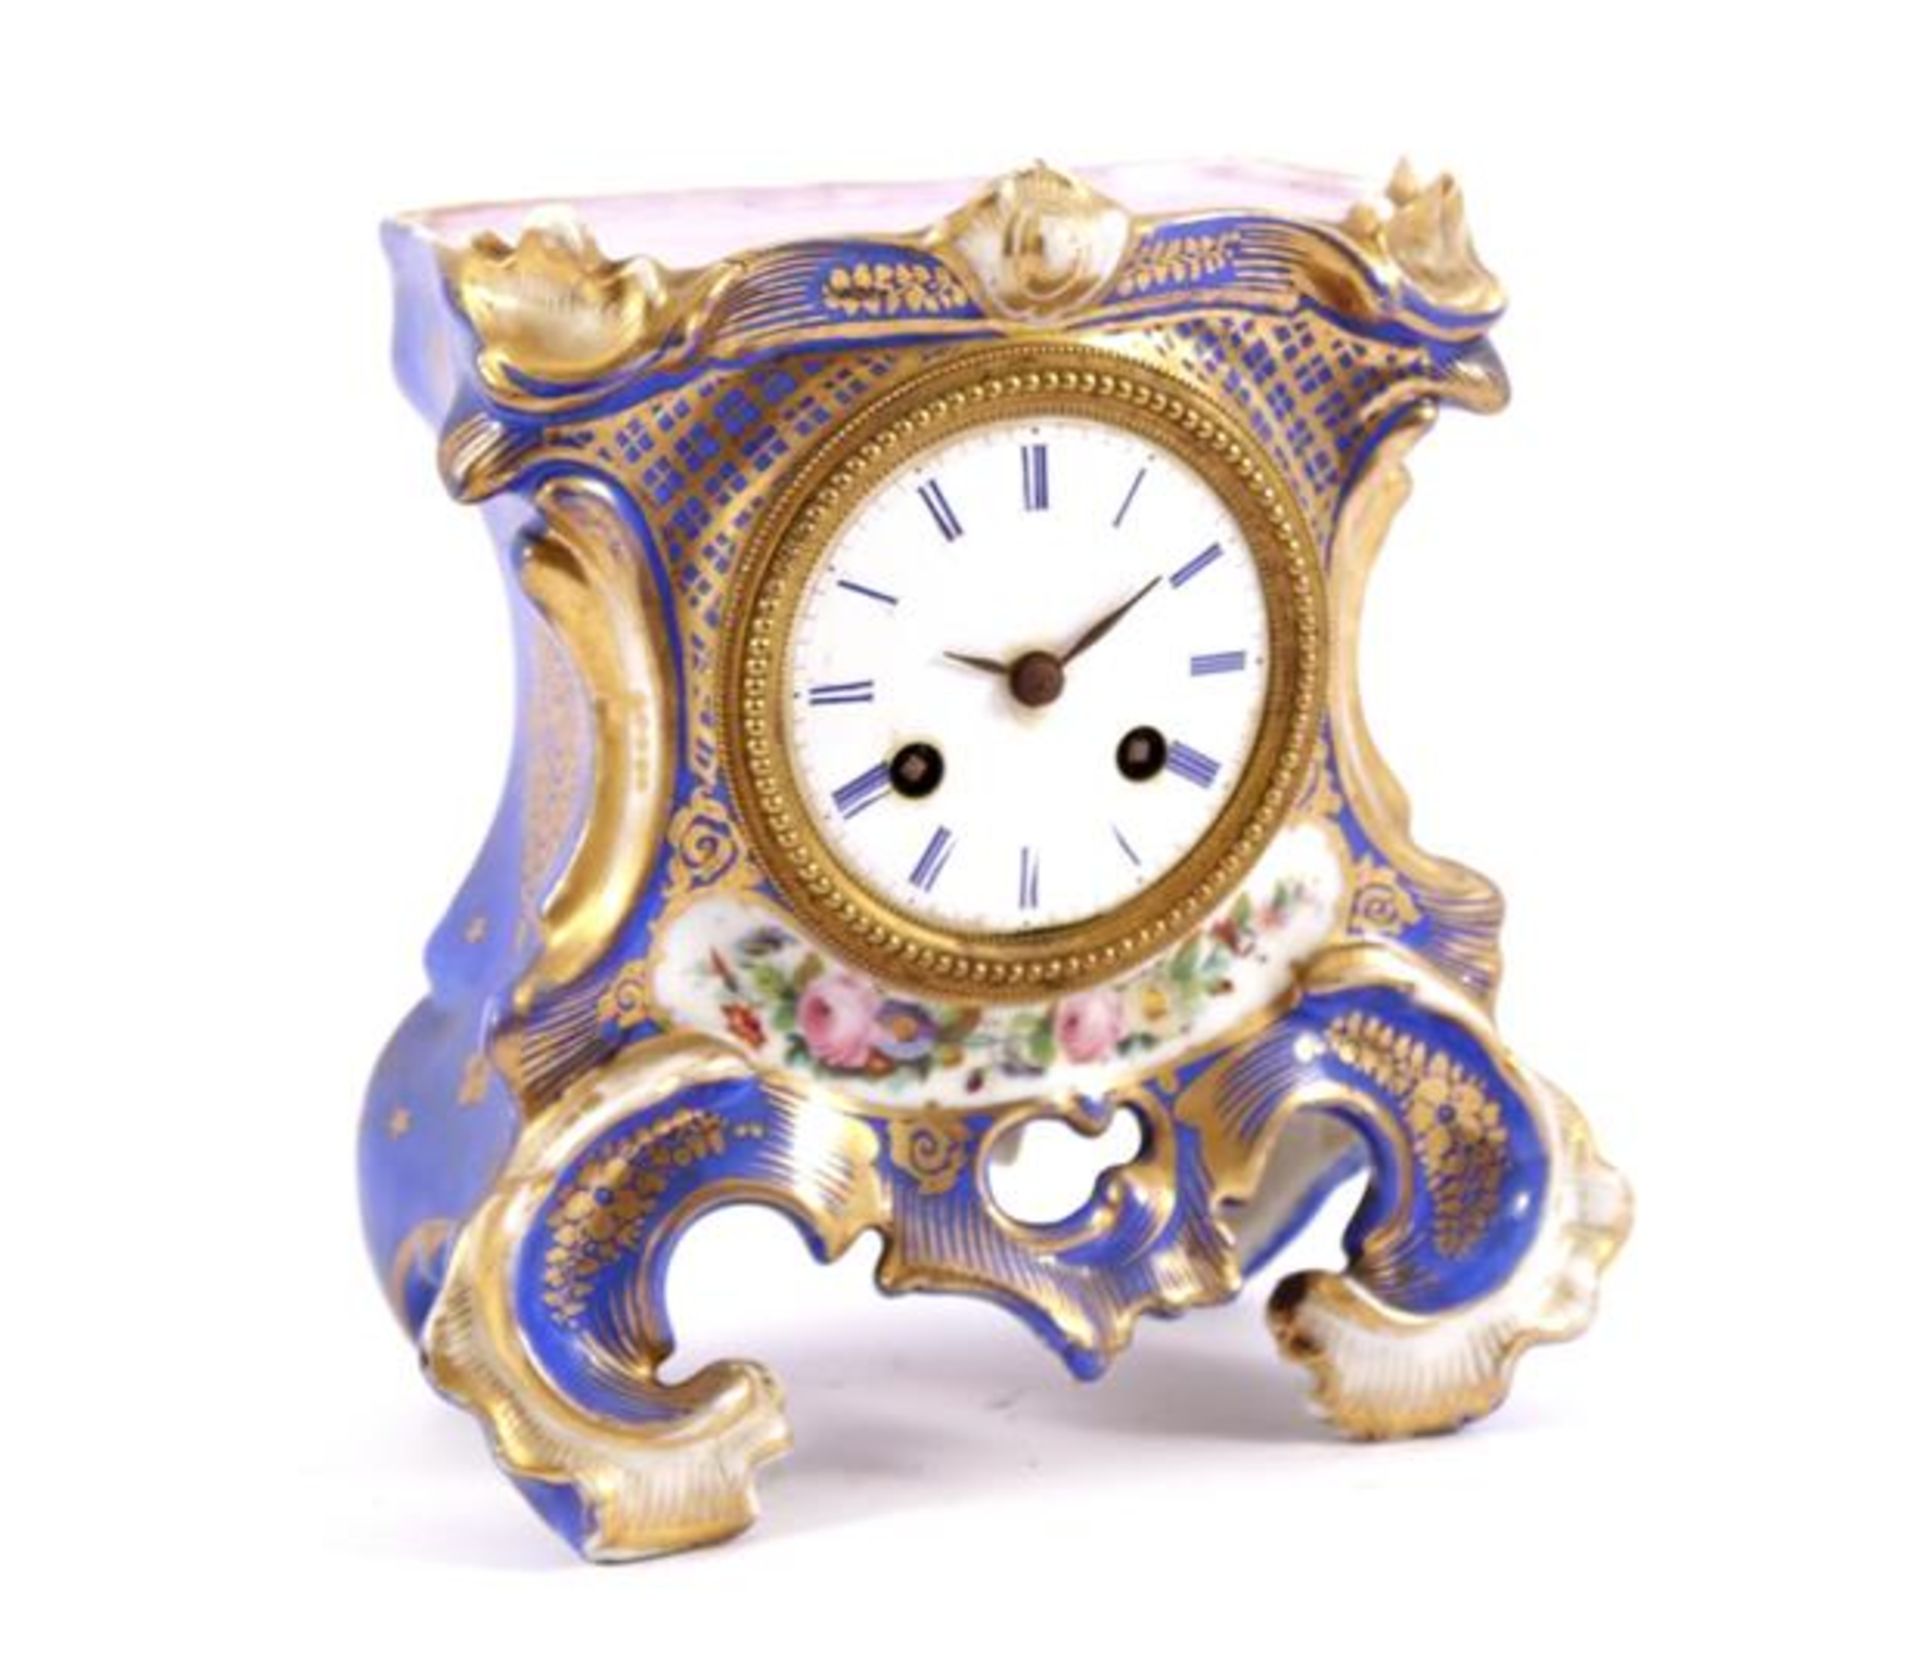 Classic 19th century porcelain painted & nbsp; table clock 19 cm high, 19 cm wide